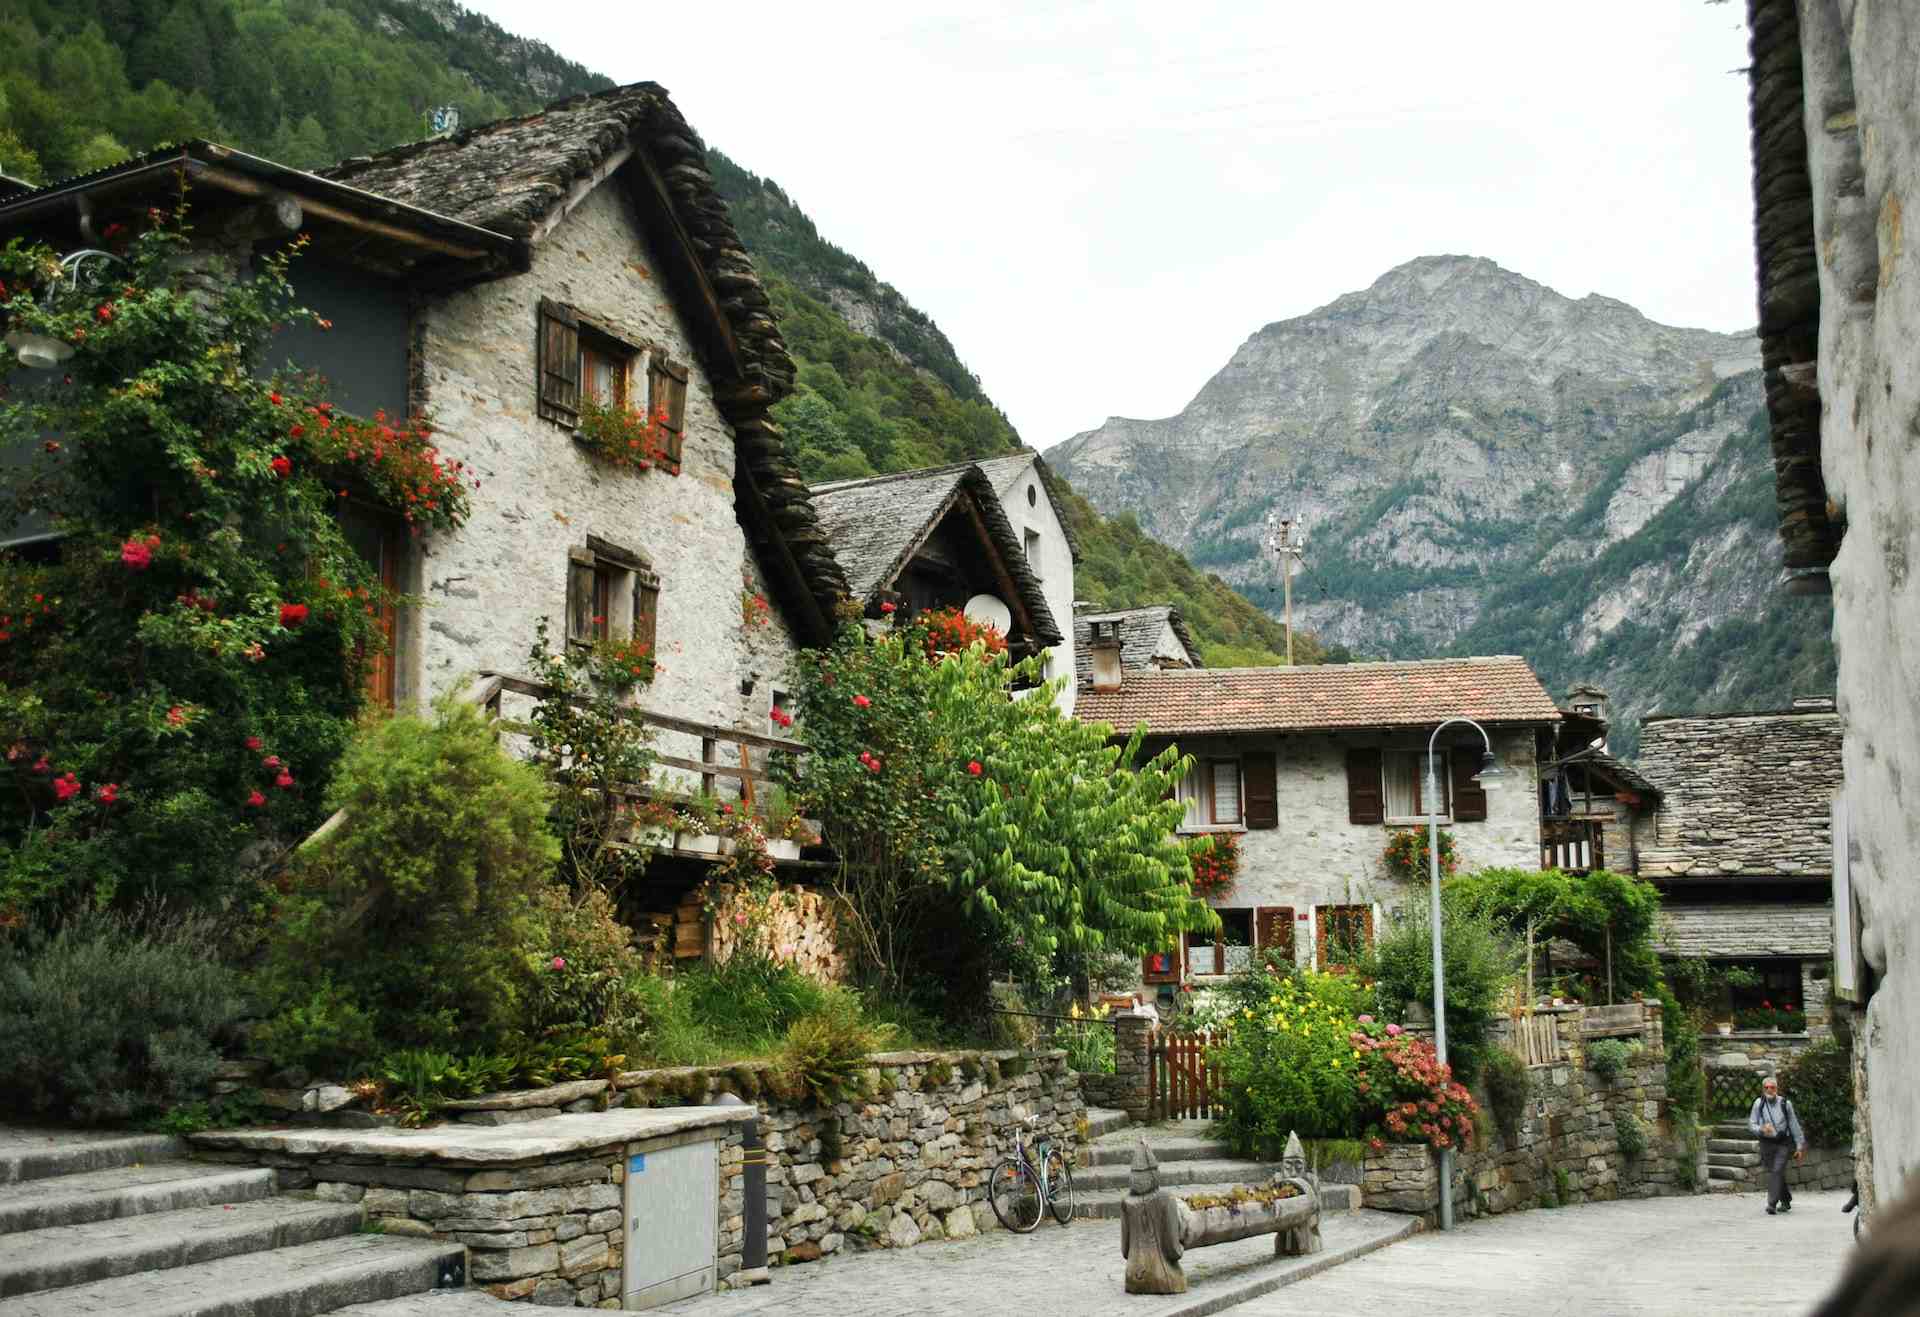 Alpe Bolla Carassina, producer in Blenio Campo canton of Ticino in Switzerland, | Mimelis